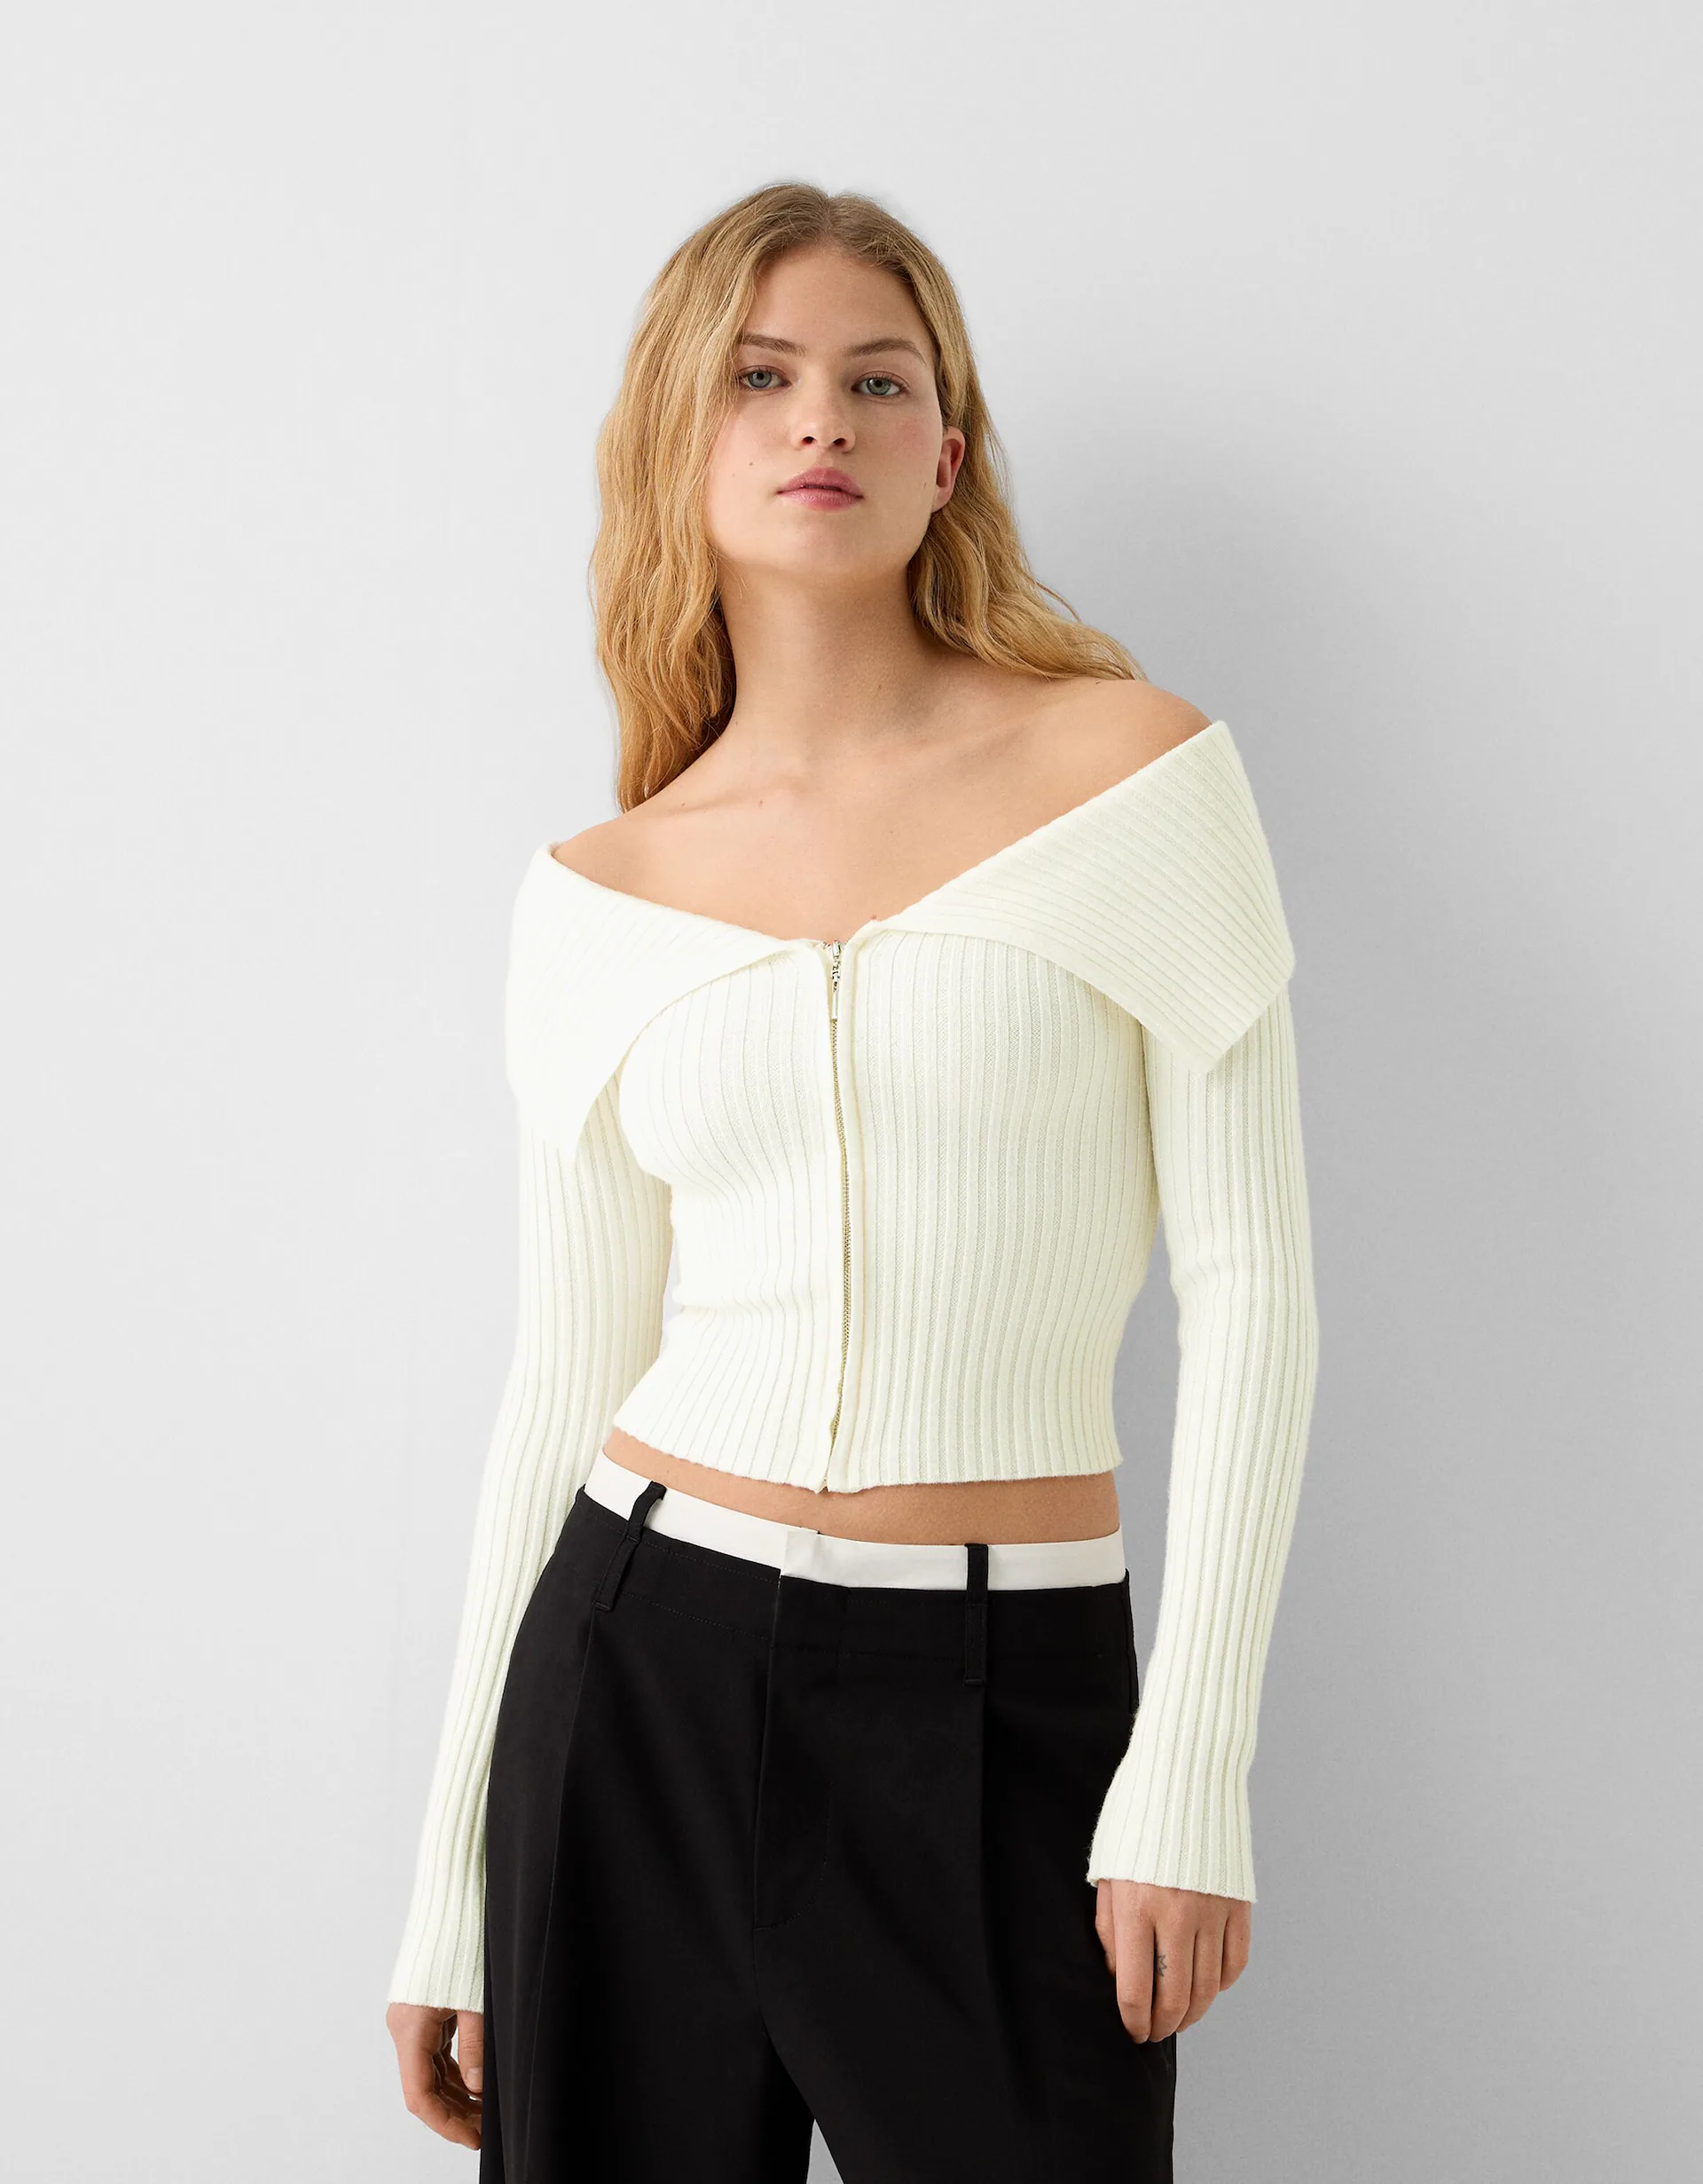 Bardot neck zip-up cardigan Women | cardigans Bershka and - Sweaters 